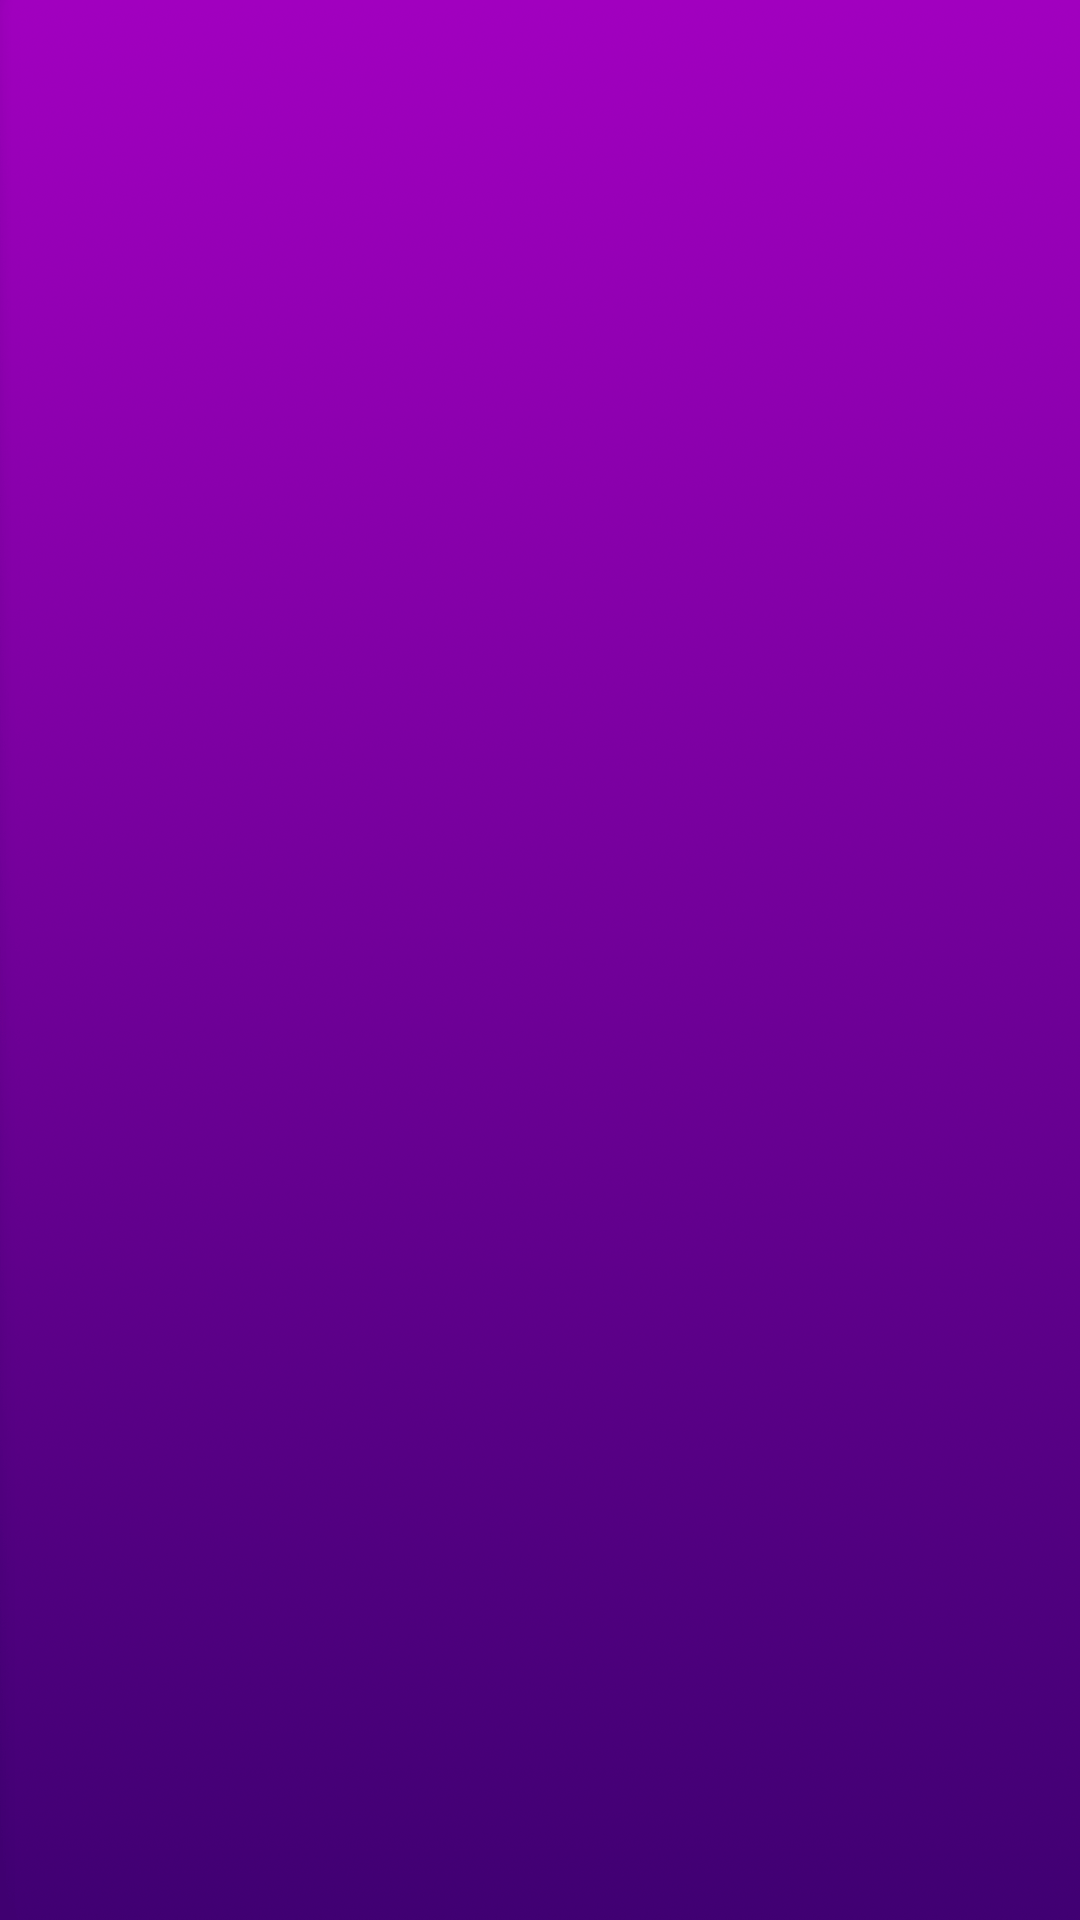 Purple Gradient Background  Free Stock Photo